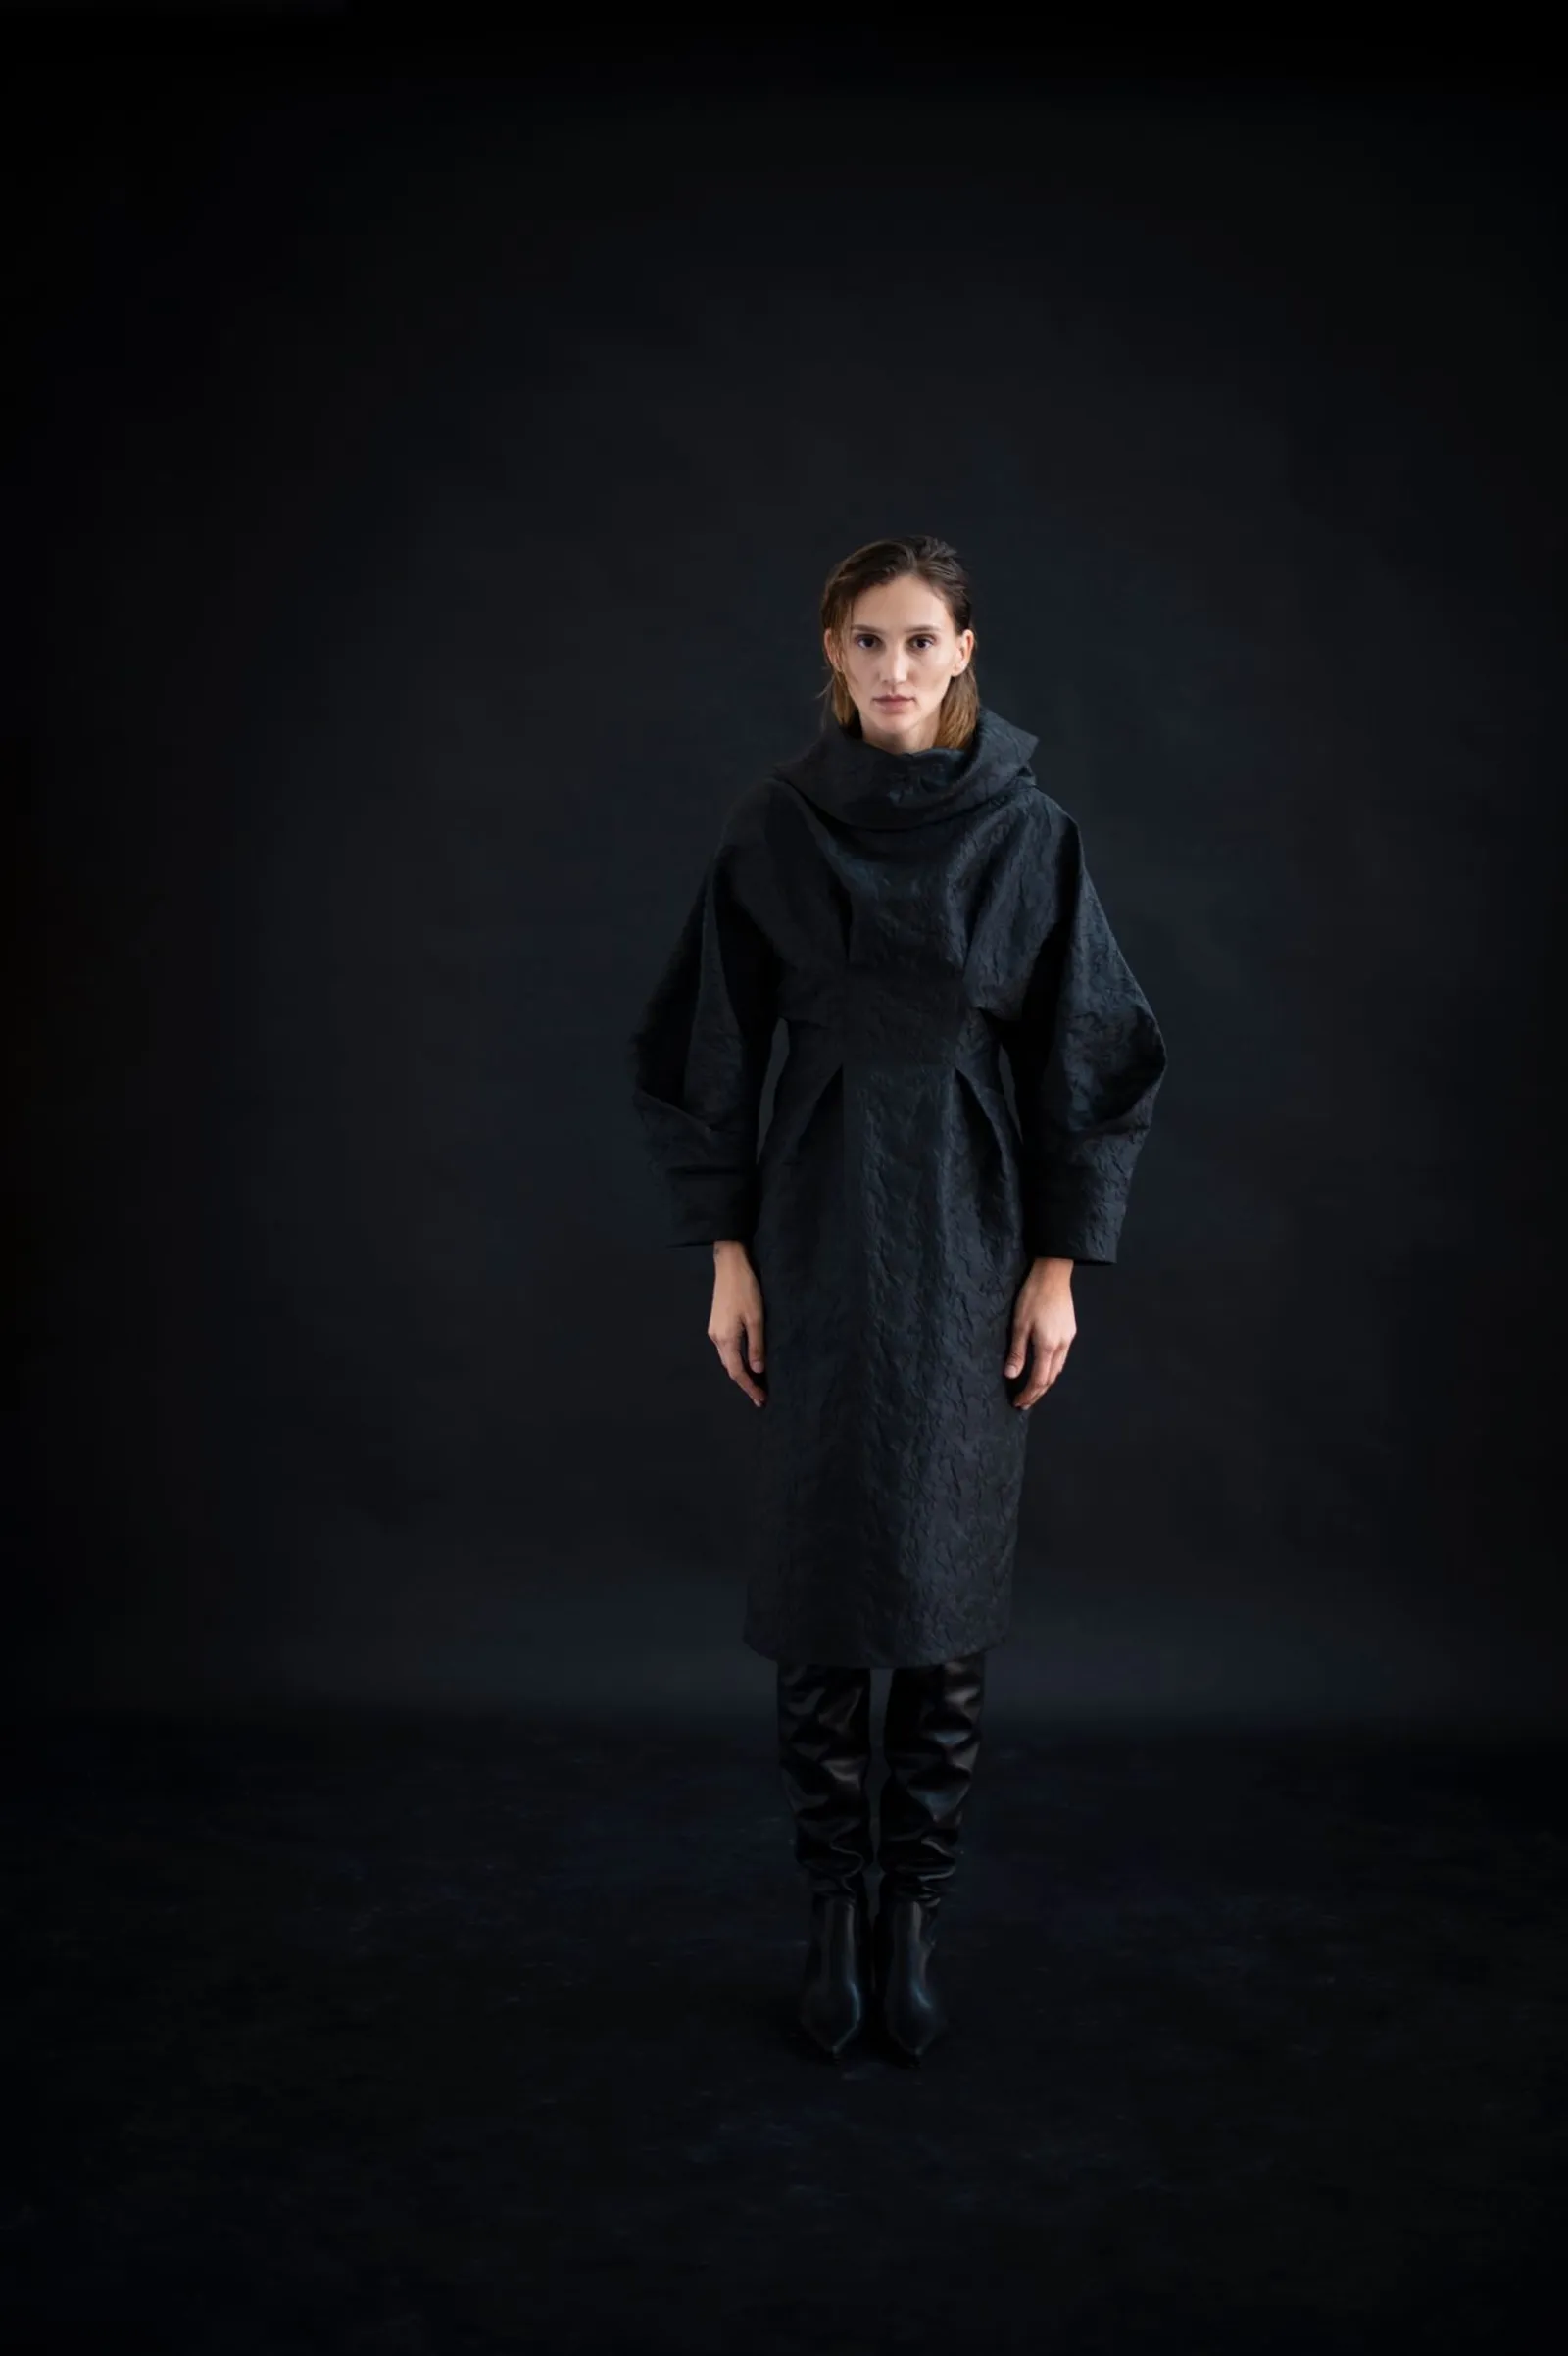 Perkenalkan Renkai, Fashion Brand Terbaru dengan Koleksi Edgy & Bold